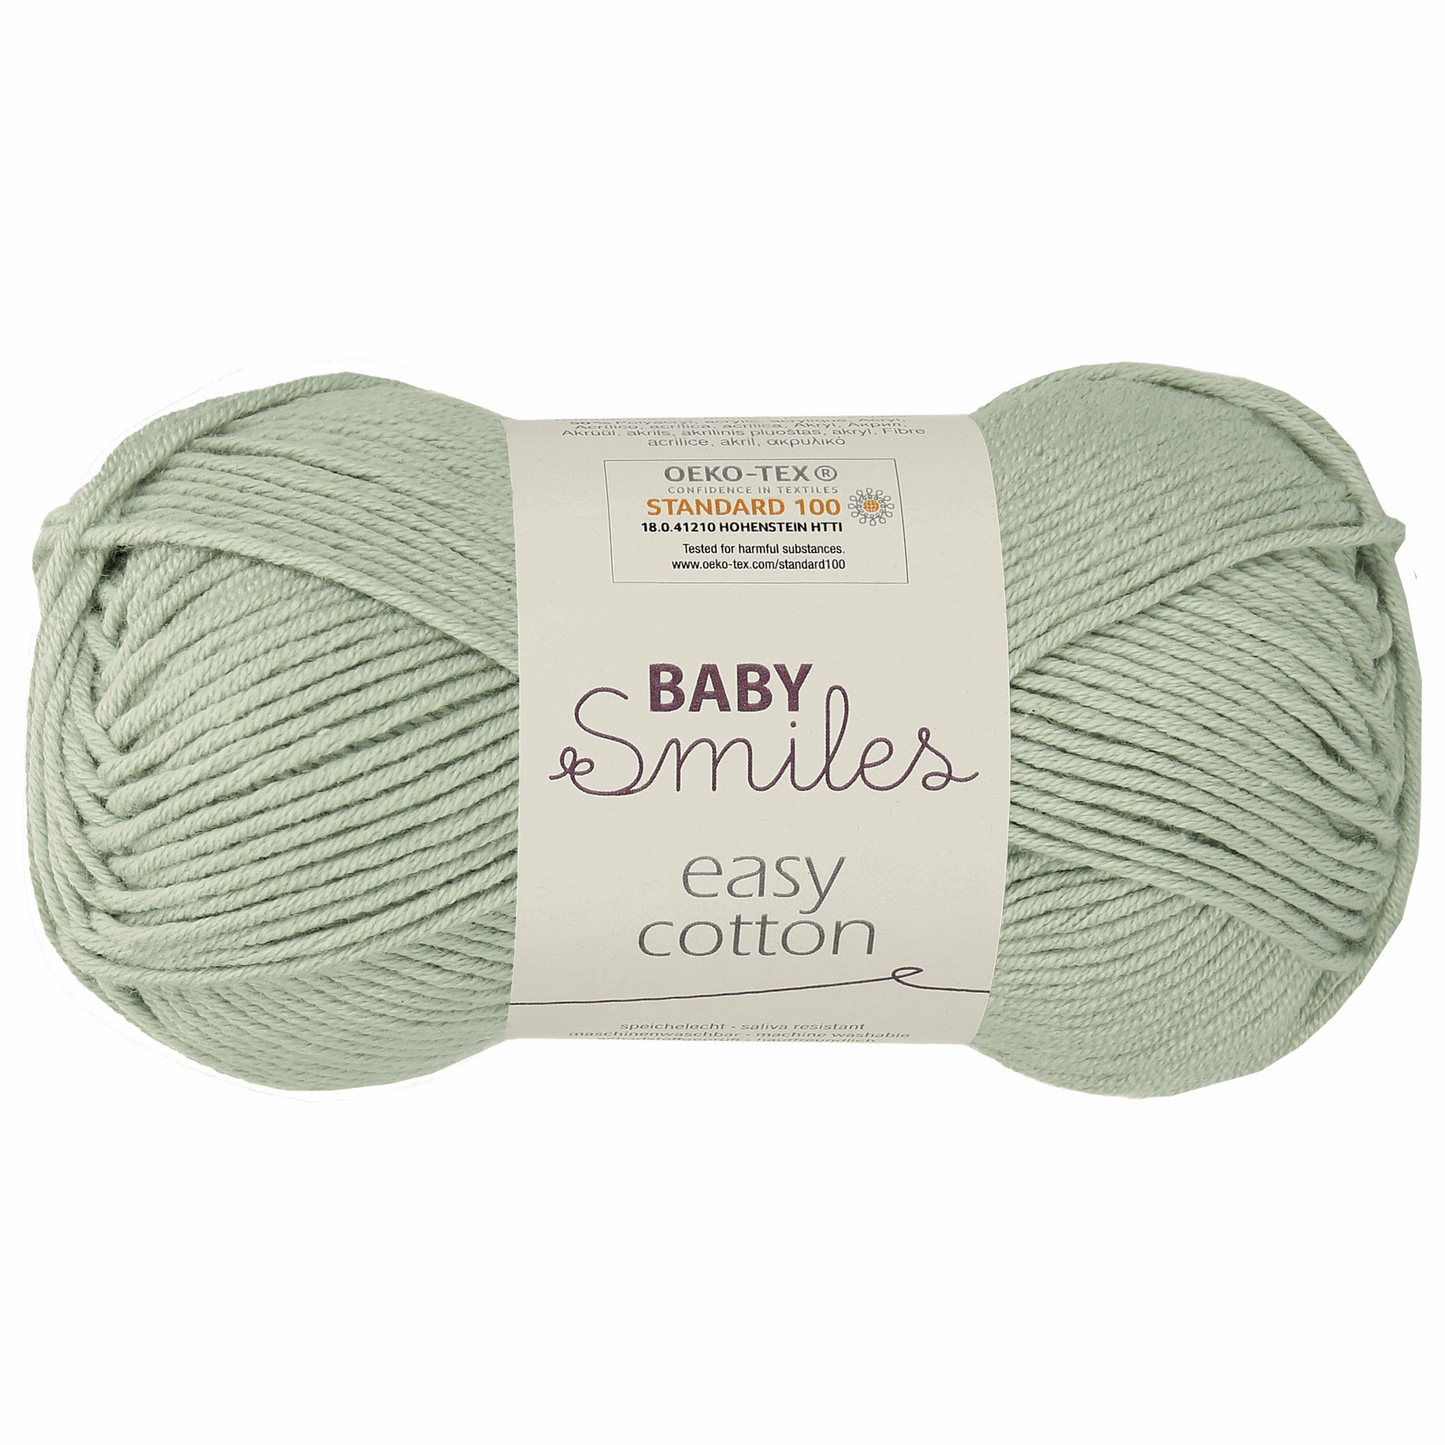 Easy Cotton -Baby smiles, 90306, color 1077, pistachio